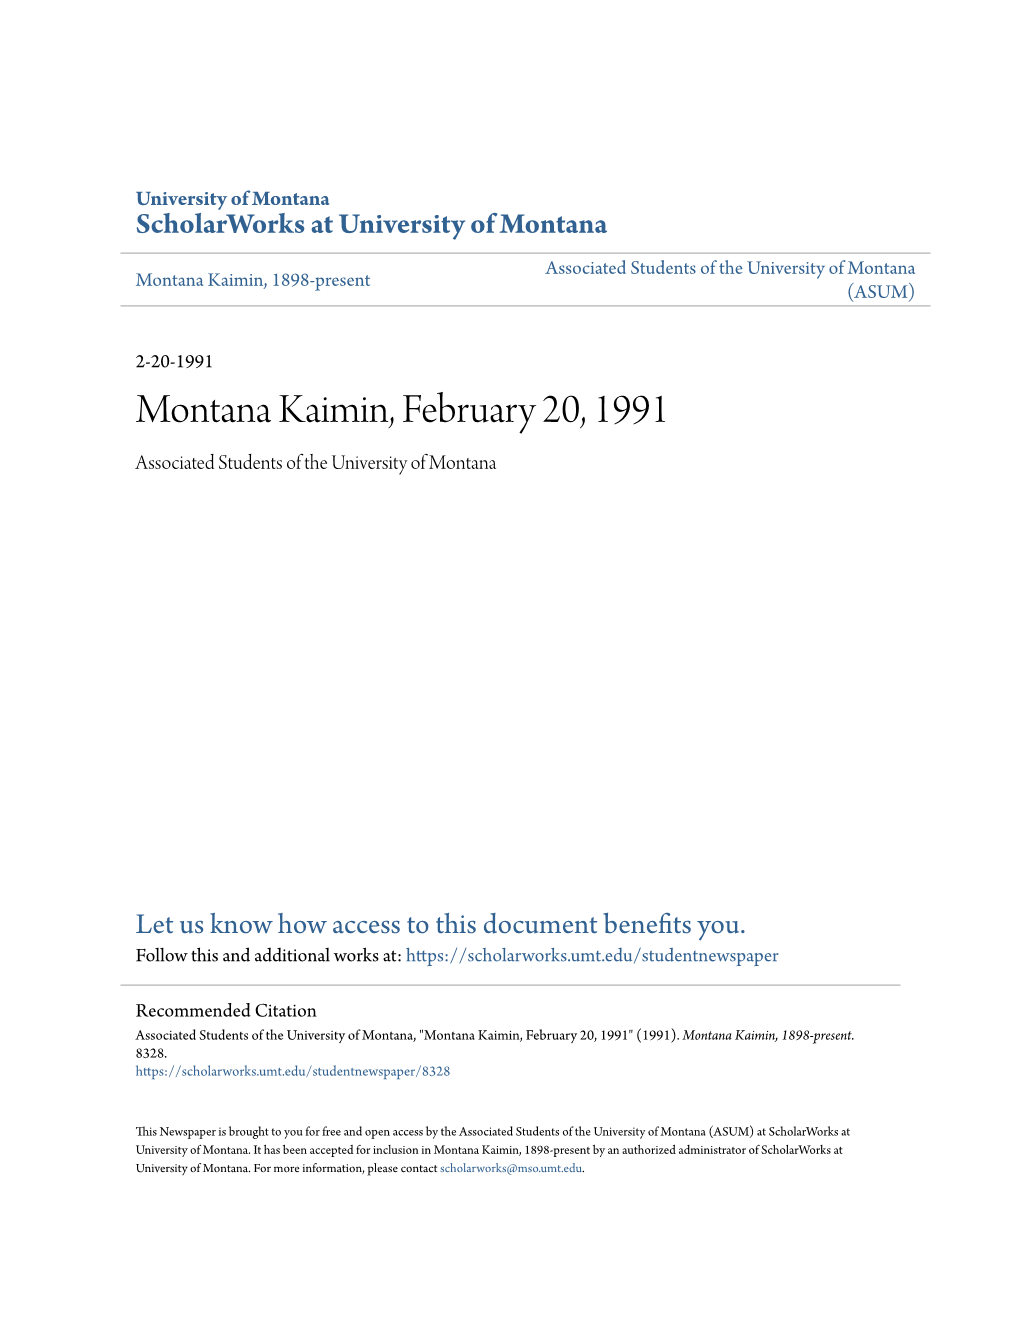 Montana Kaimin, February 20, 1991 Associated Students of the University of Montana